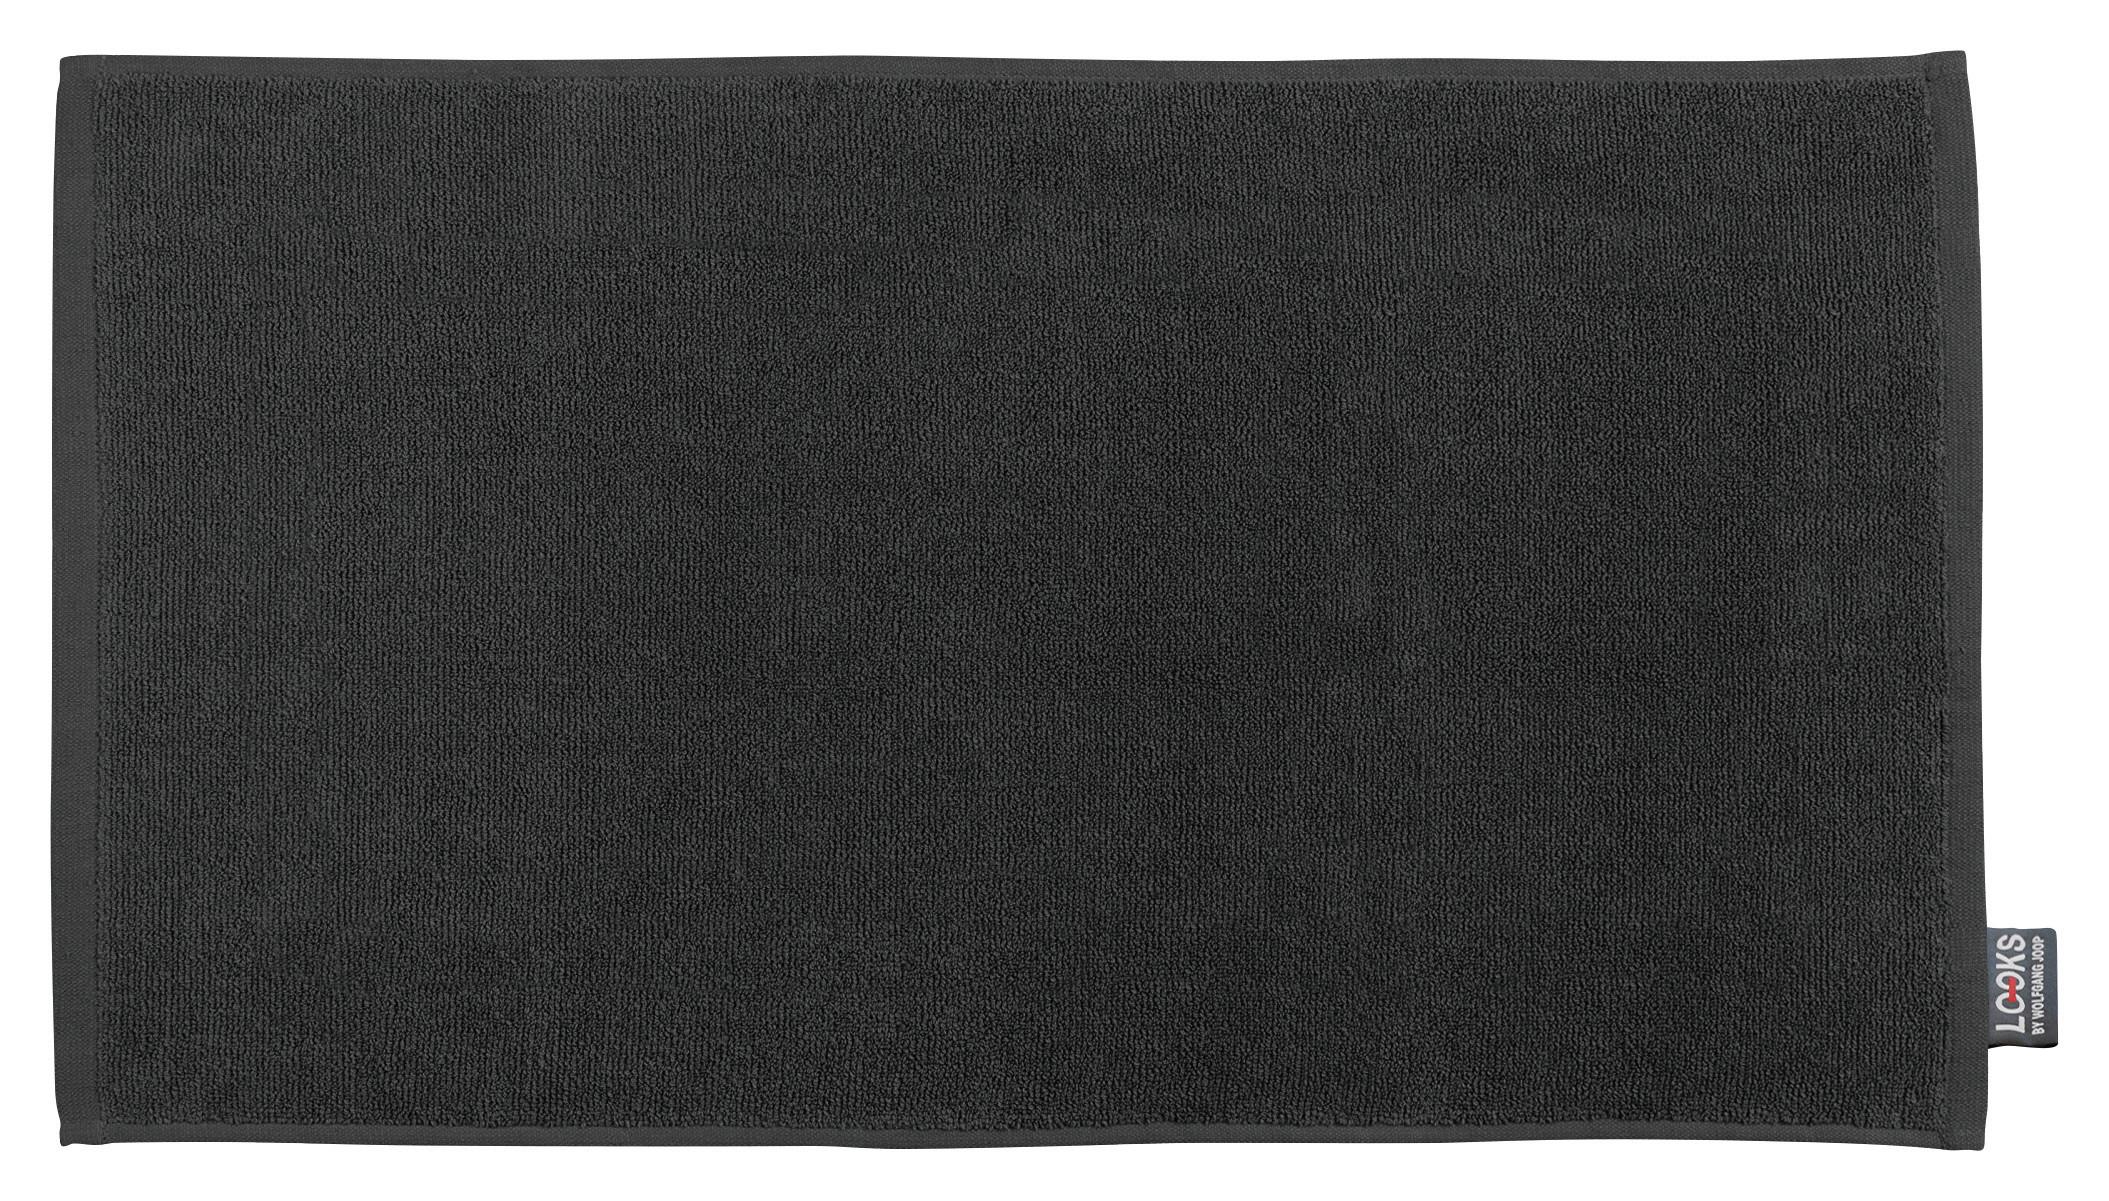 Badematte Looks Anthrazit Frottier 50x70 cm - Anthrazit, KONVENTIONELL, Textil (50/70cm) - LOOKS by W.Joop